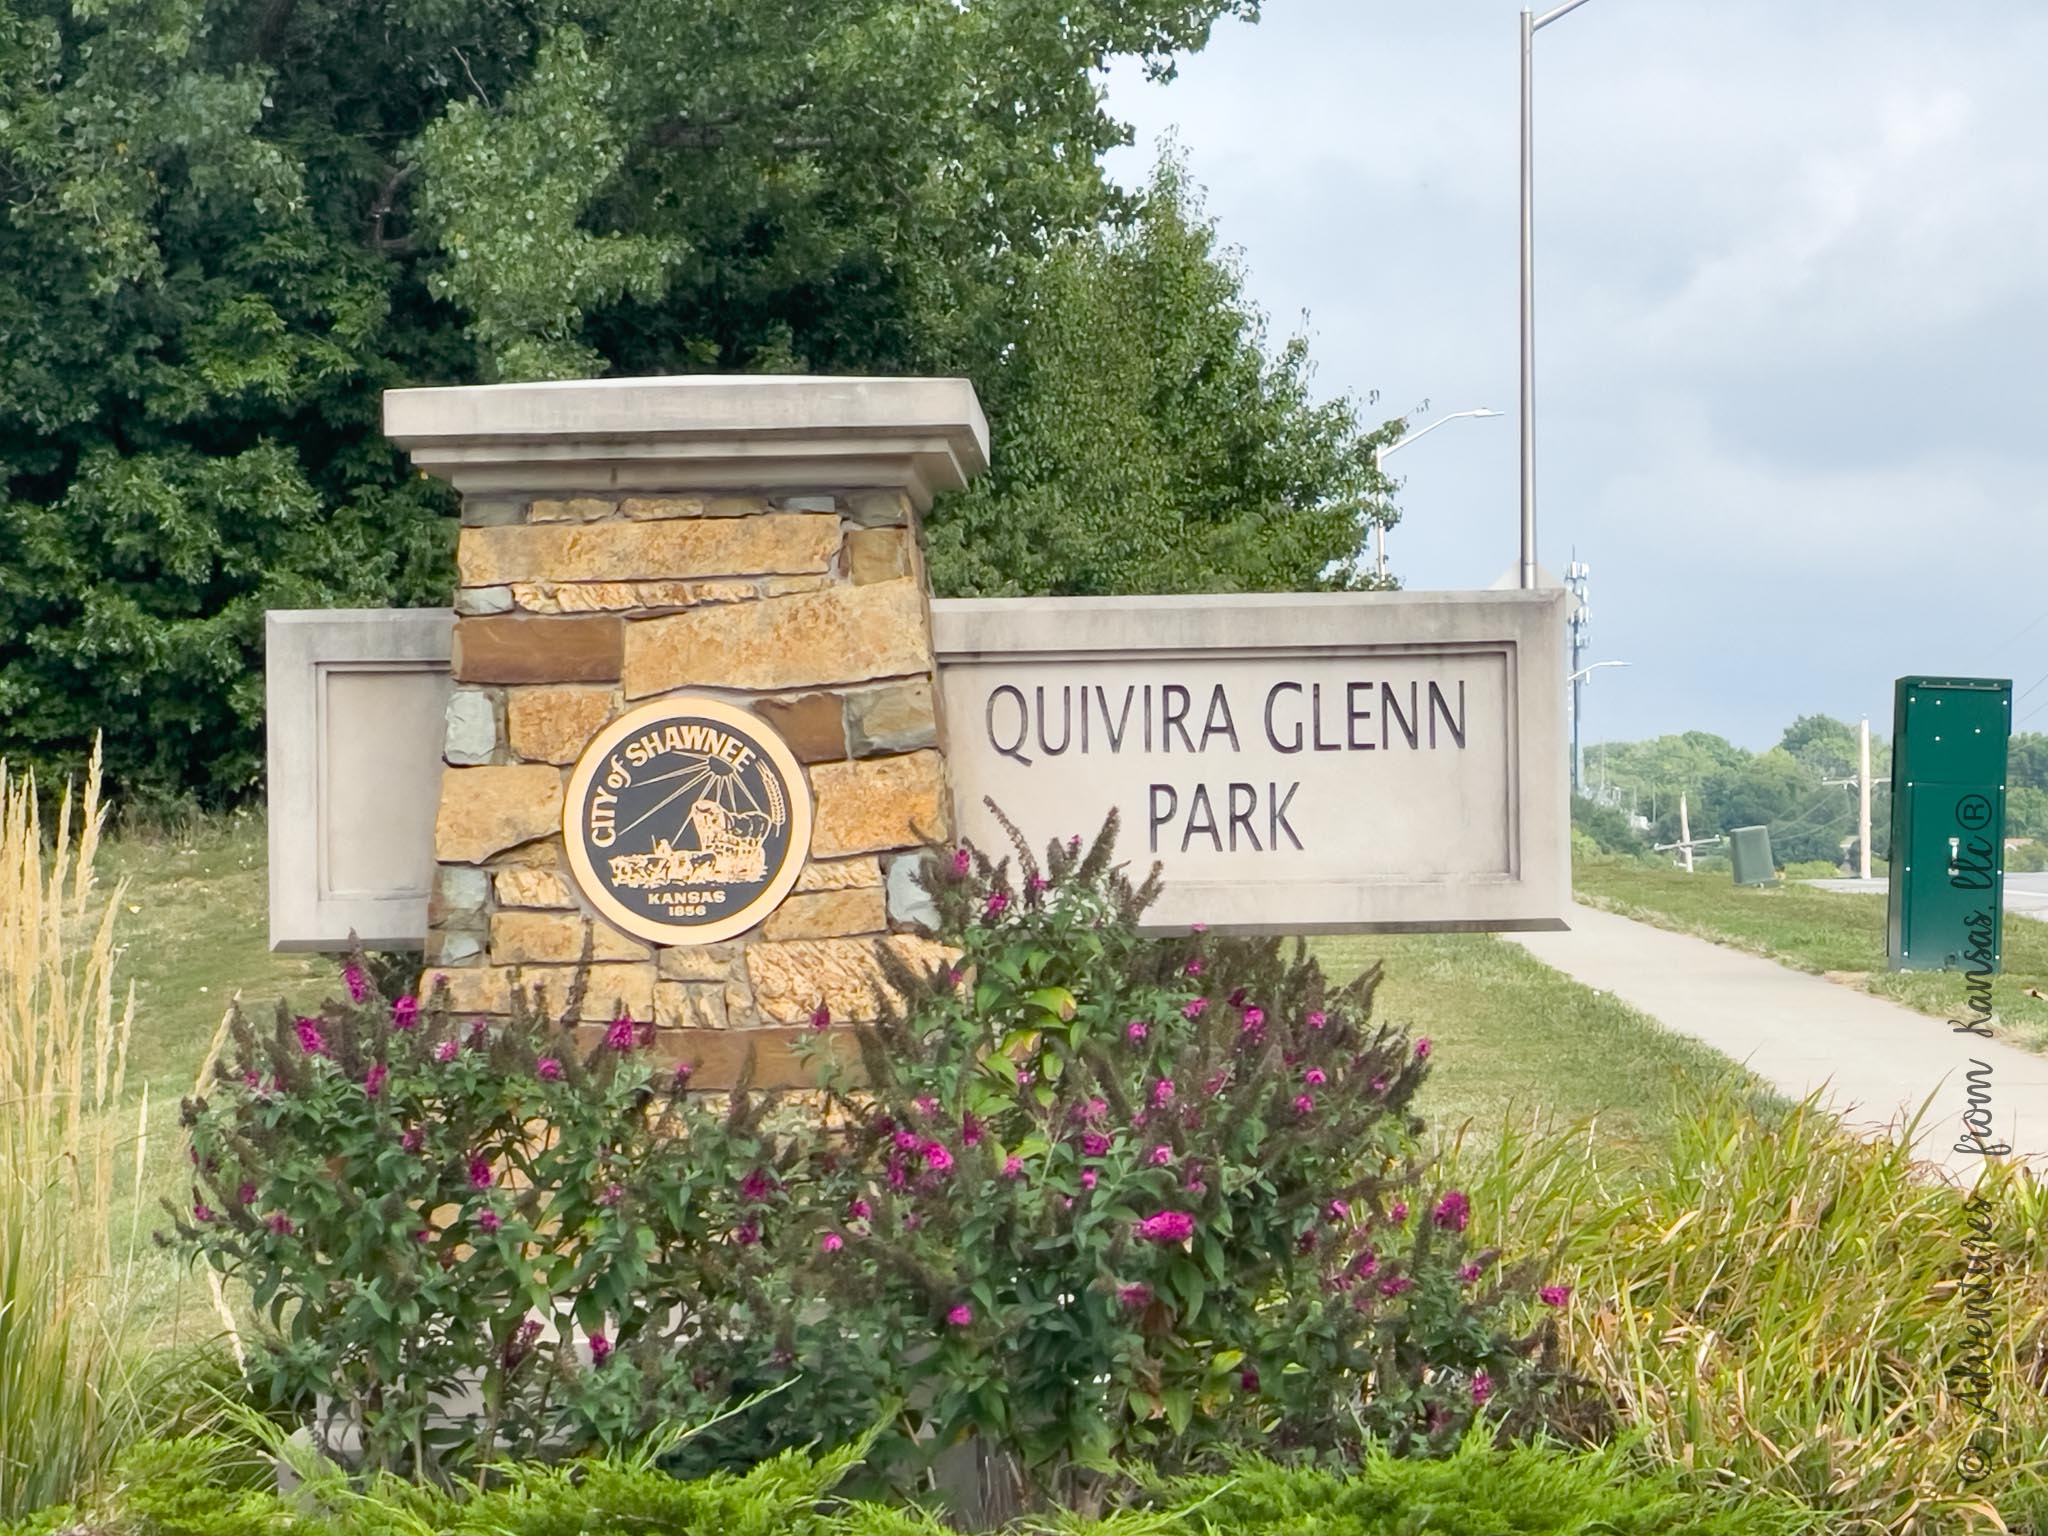 Sign at front of the park displaying name Quivira Glenn